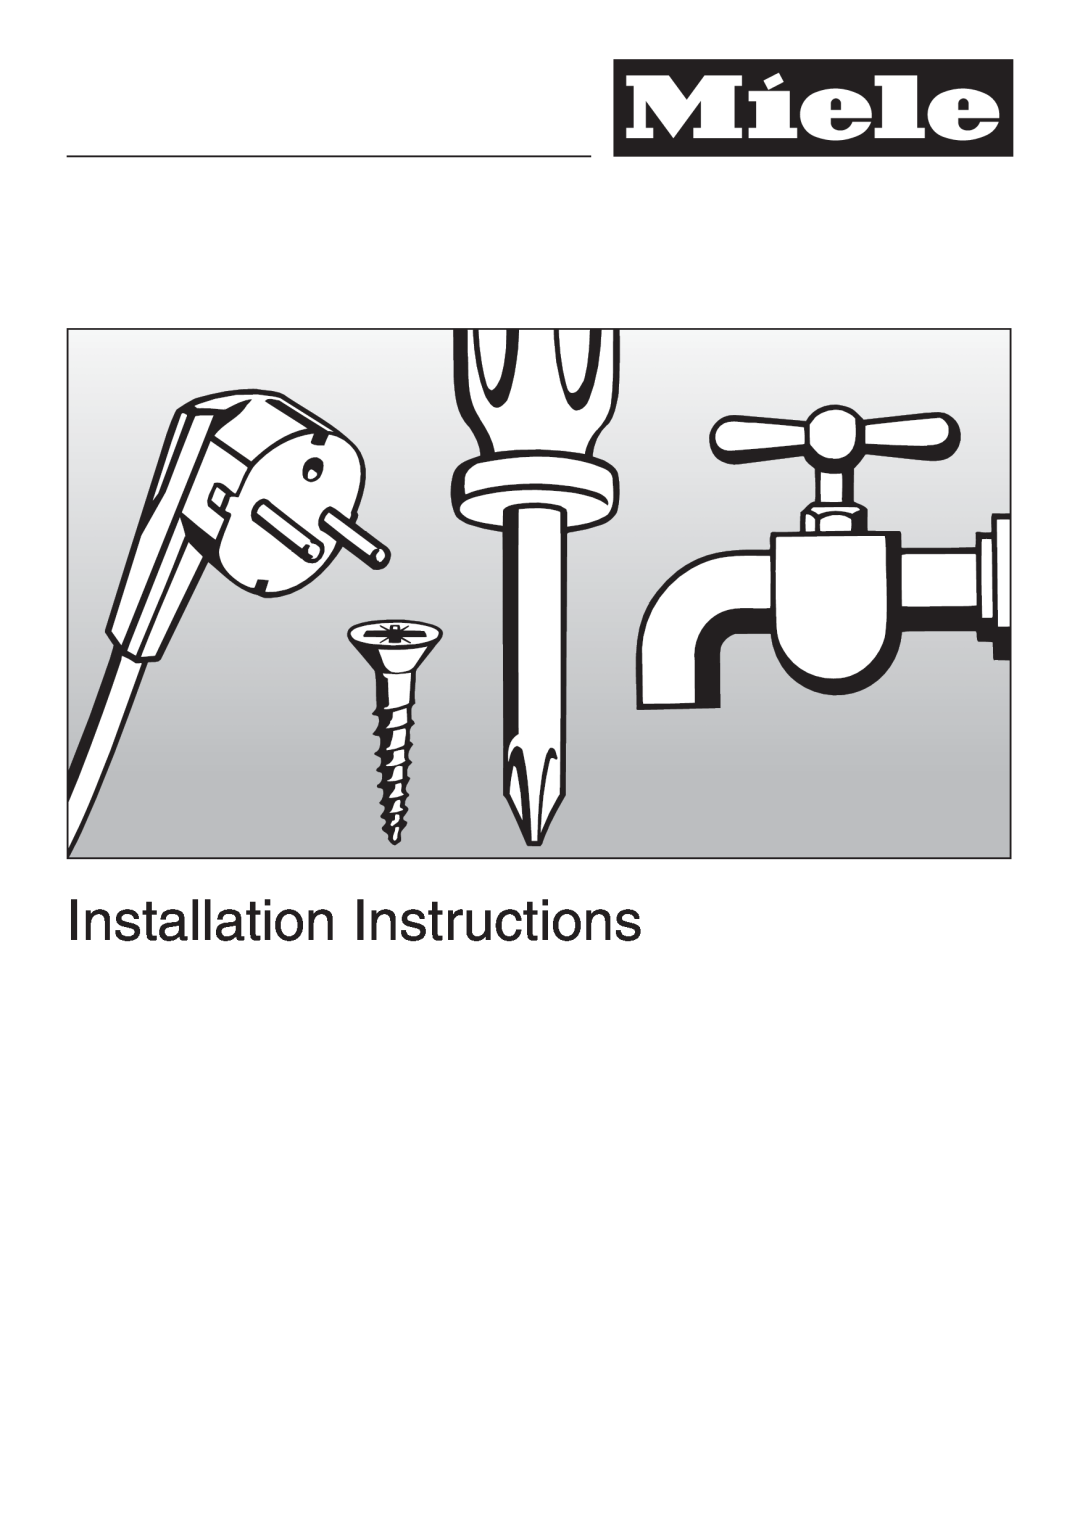 Miele DA220-3 installation instructions Installation Instructions 